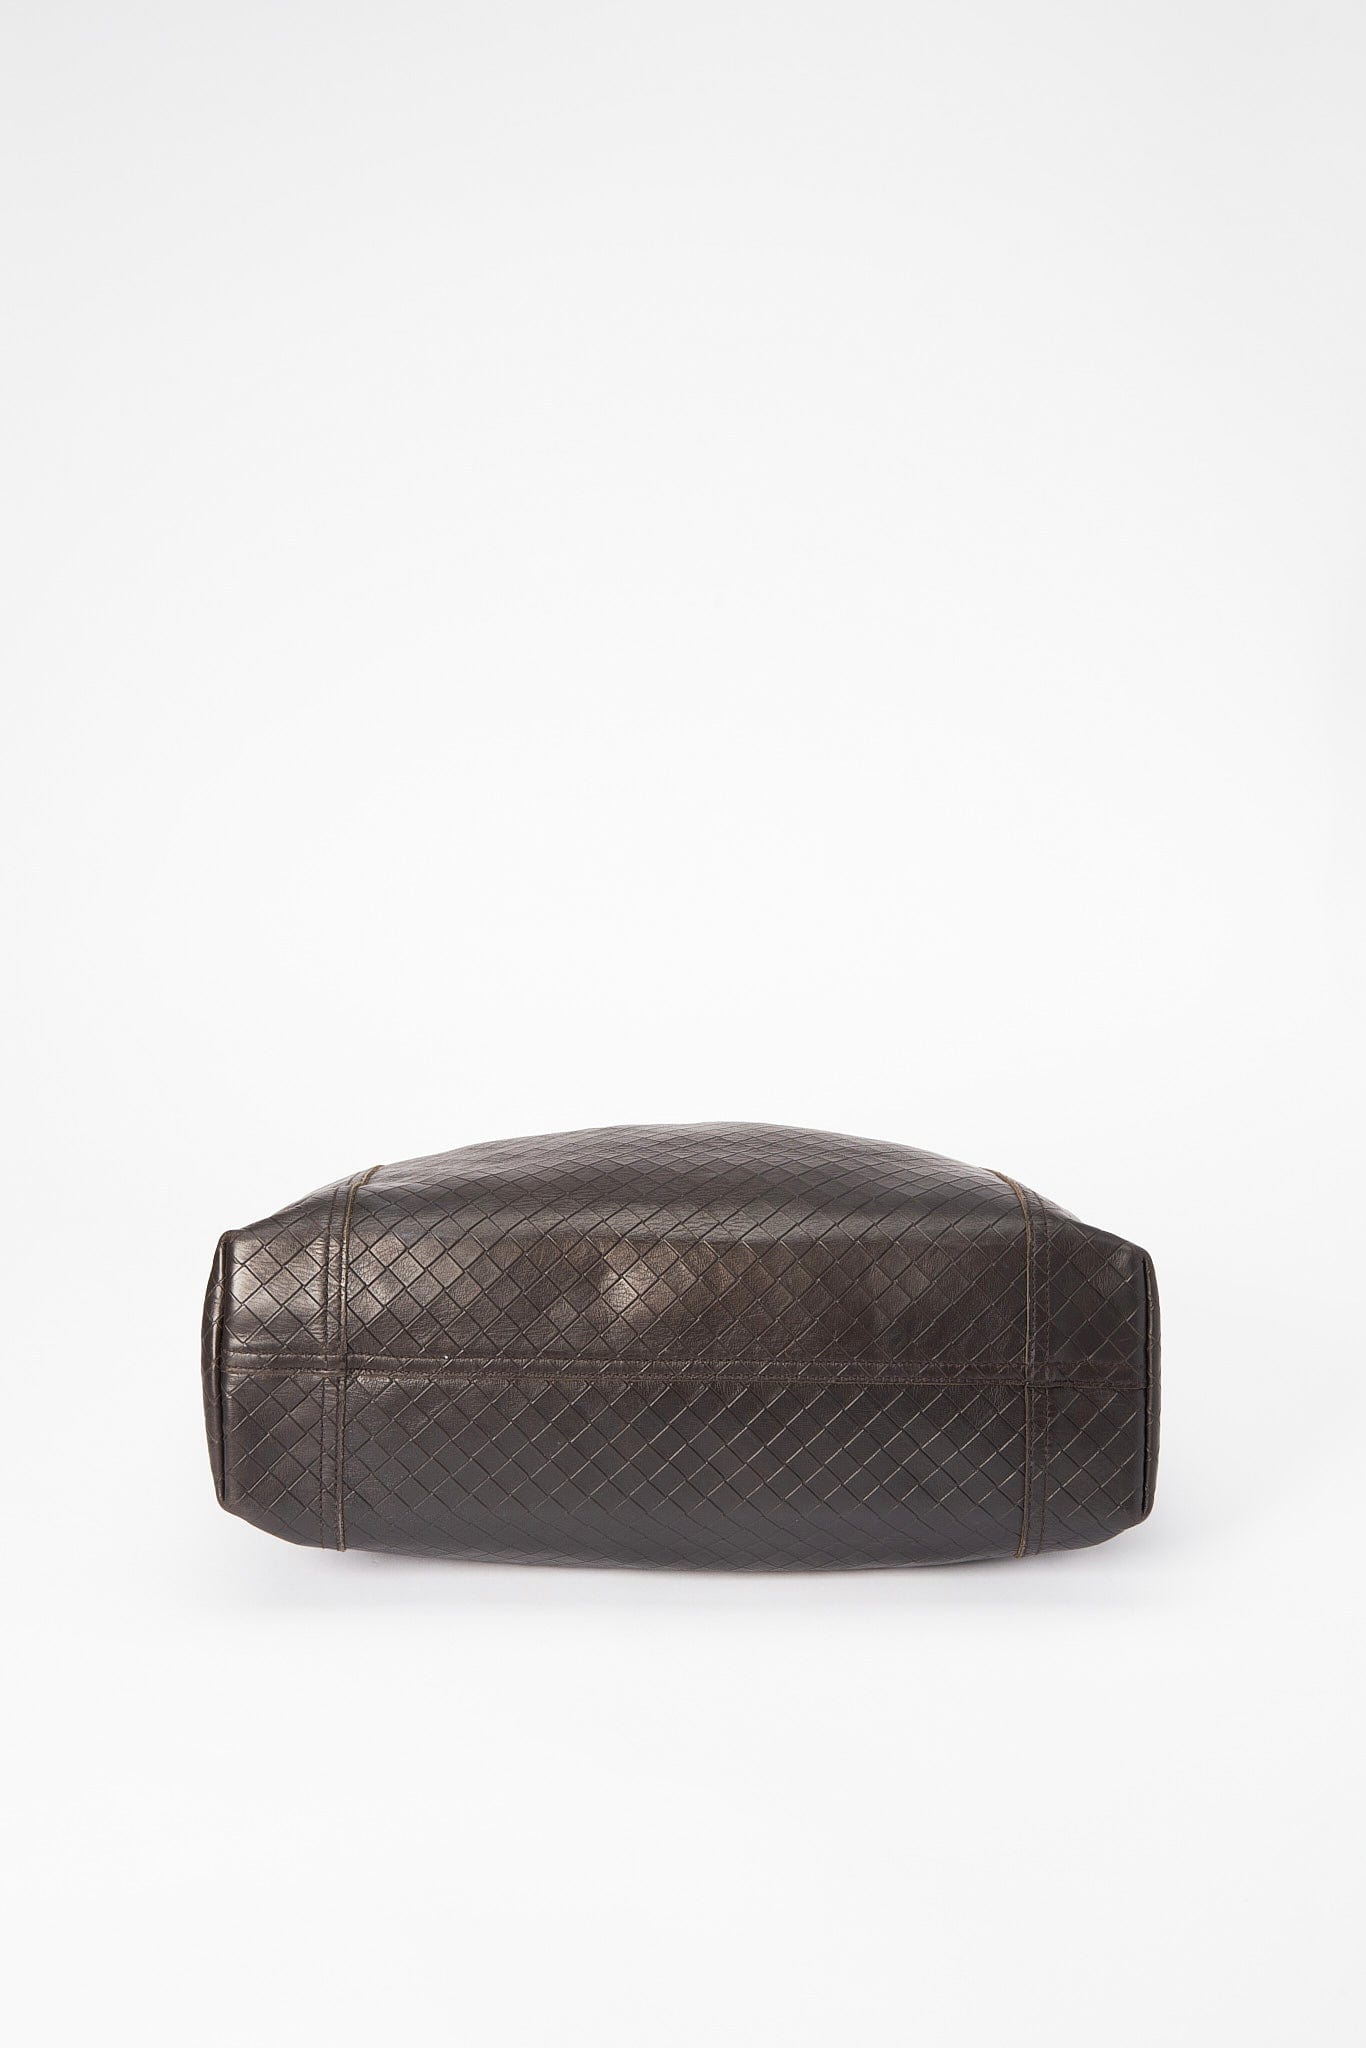 Bottega Veneta Intrecciato Leather Tote – The Hosta